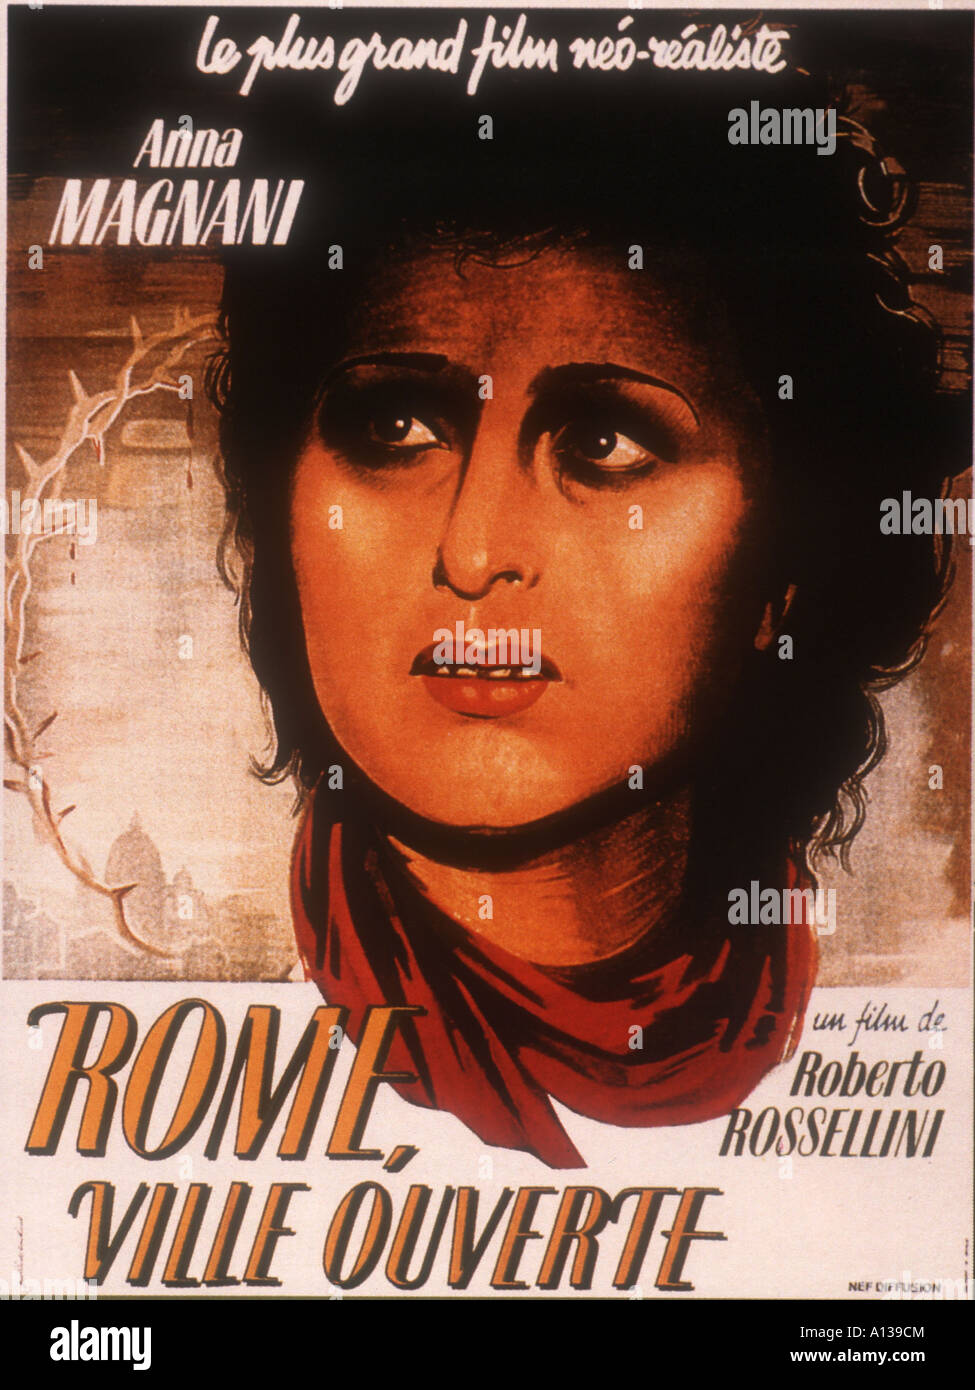 Roma città aperta Año 1945 Director Roberto Rossellini Anna Magnani Gran Premio en el Festival de Cannes de 1946 carteles de cine Foto de stock